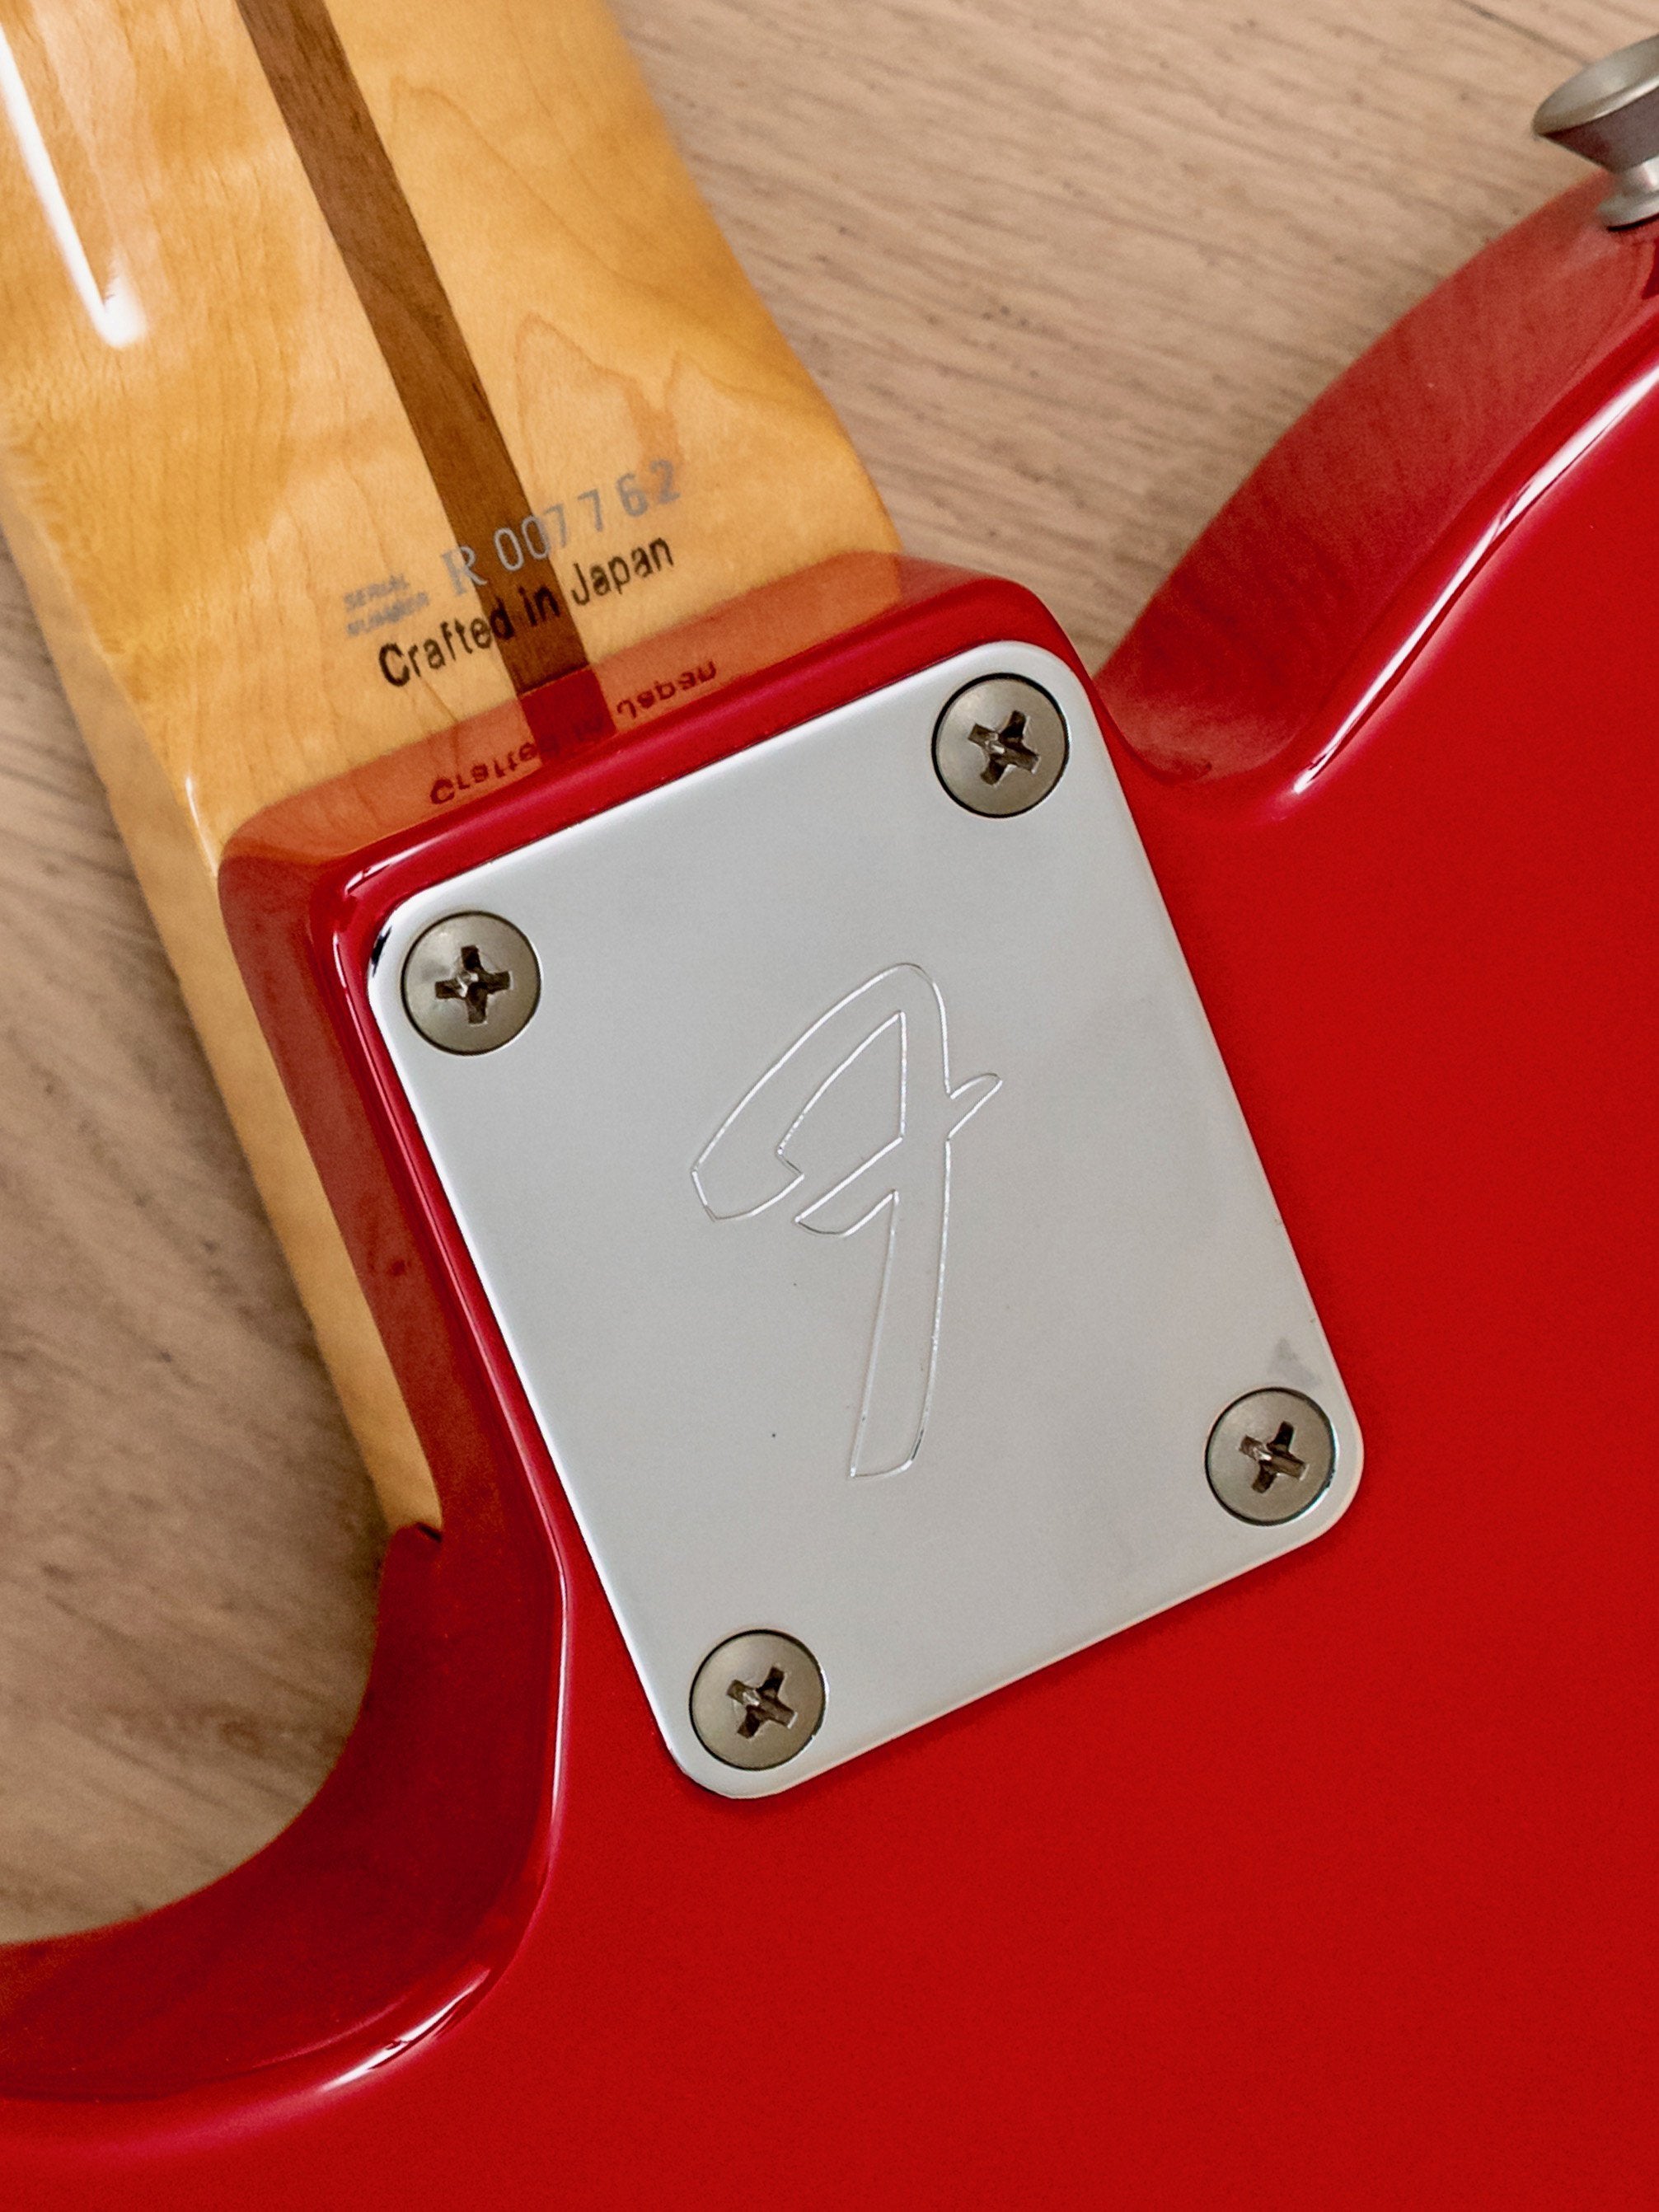 2004 Fender Telecaster '71 Vintage Reissue TL71-58 Torino Red, Ash & Flame Maple, Japan CIJ